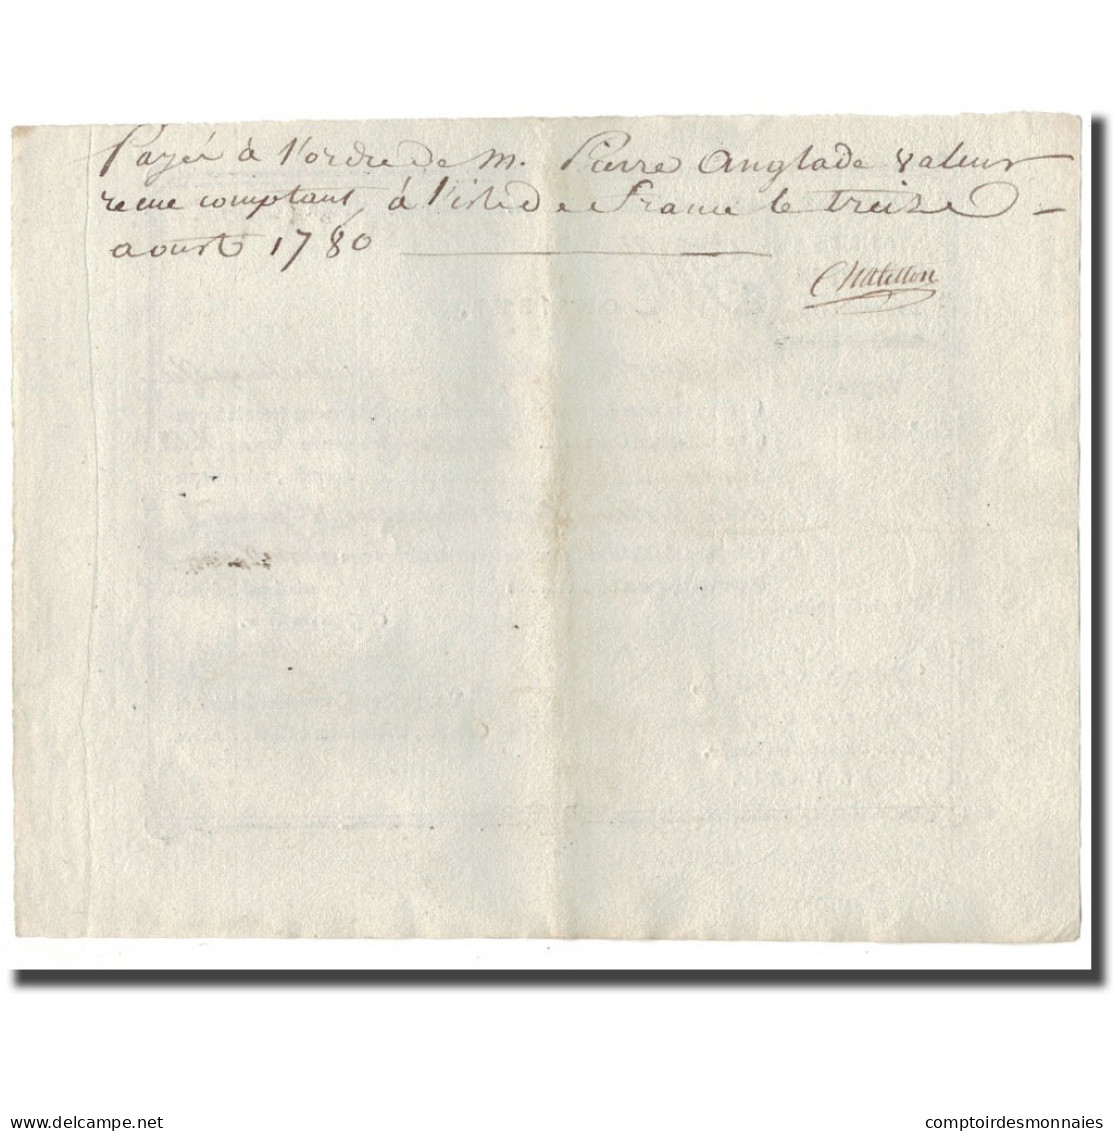 France, Traite, Colonies, Isle De Bourbon, 3000 Livres Tournois, 1780, SUP - ...-1889 Franchi Antichi Circolanti Durante Il XIX Sec.